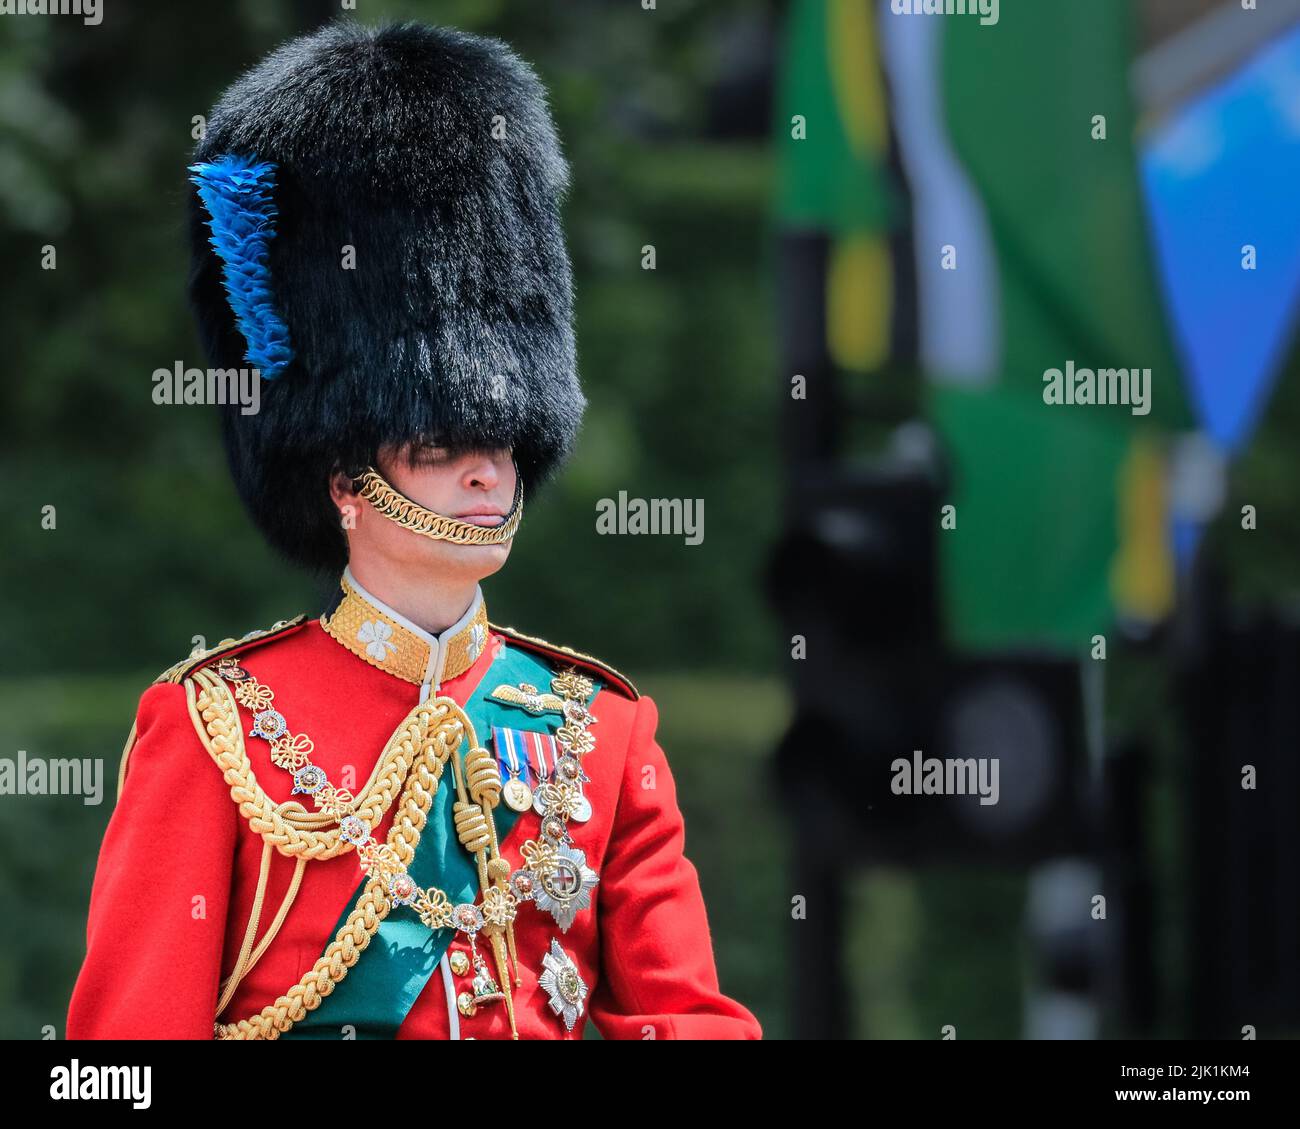 William, Duke of Cambridge, on horseback in military uniform, Platinum Jubilee Trooping the Colour Parade, London Stock Photo